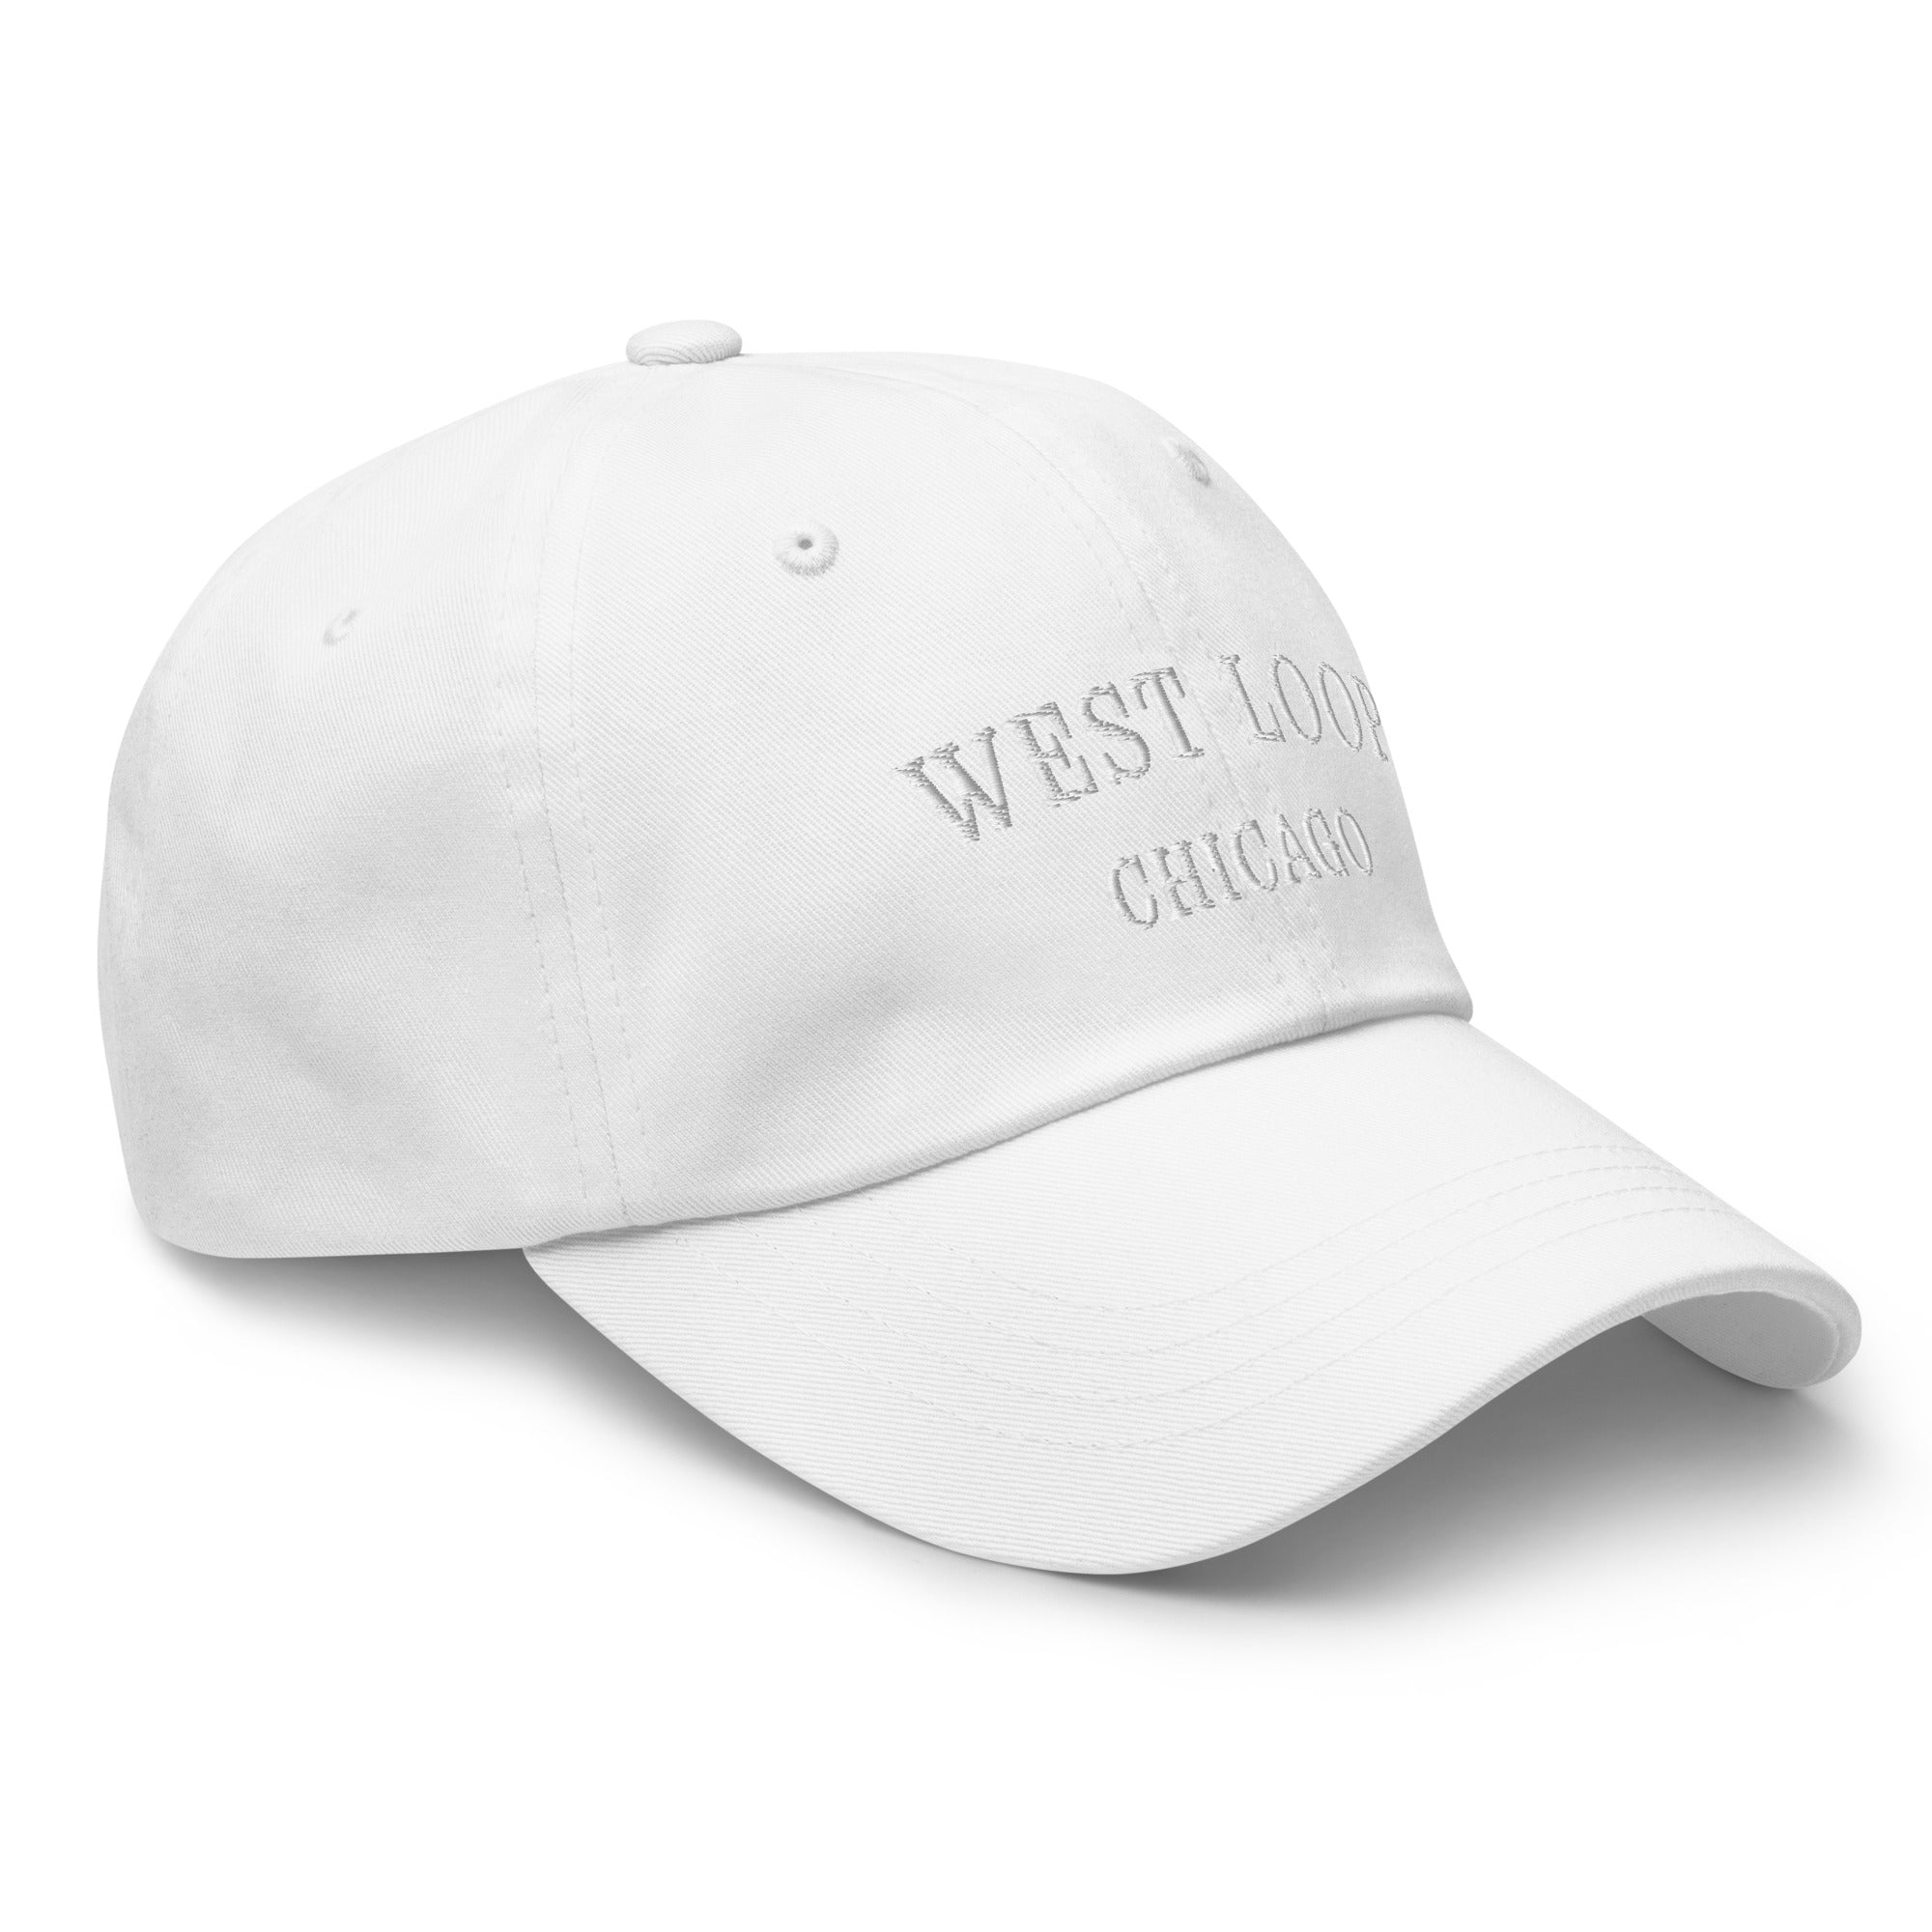 West Loop Chicago Dad Hat